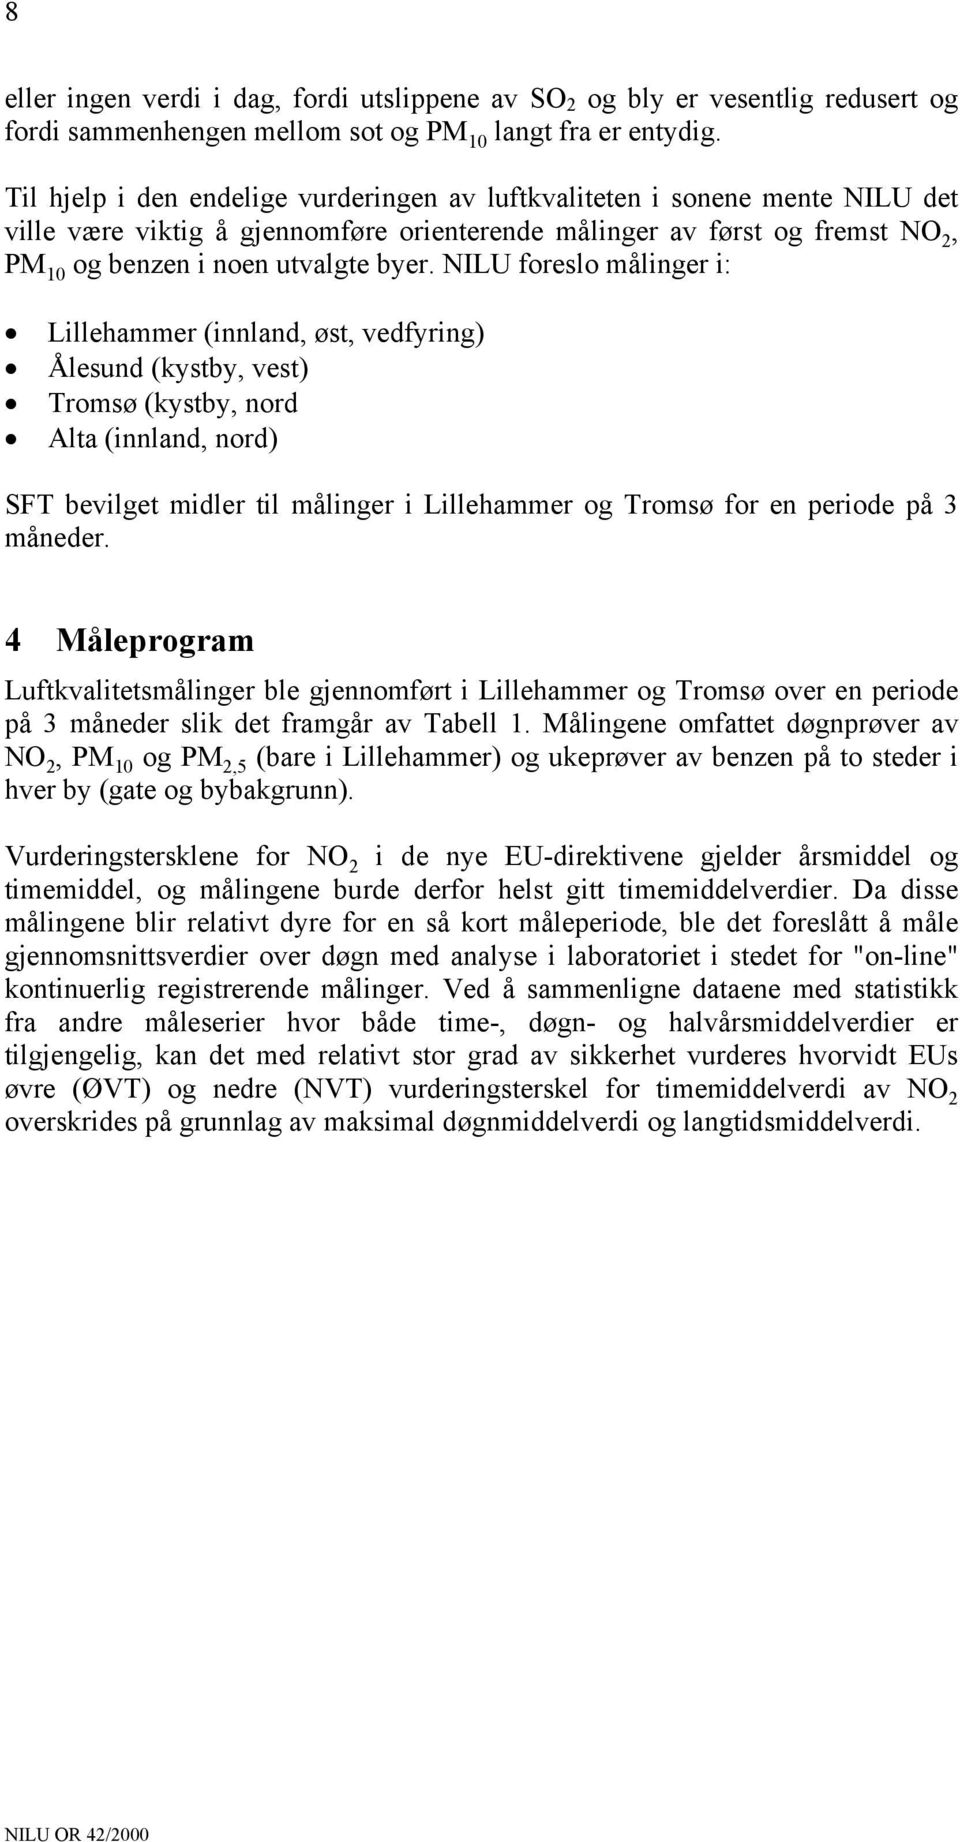 NILU foreslo målinger i: Lillehammer (innland, øst, vedfyring) Ålesund (kystby, vest) Tromsø (kystby, nord Alta (innland, nord) SFT bevilget midler til målinger i Lillehammer og Tromsø for en periode